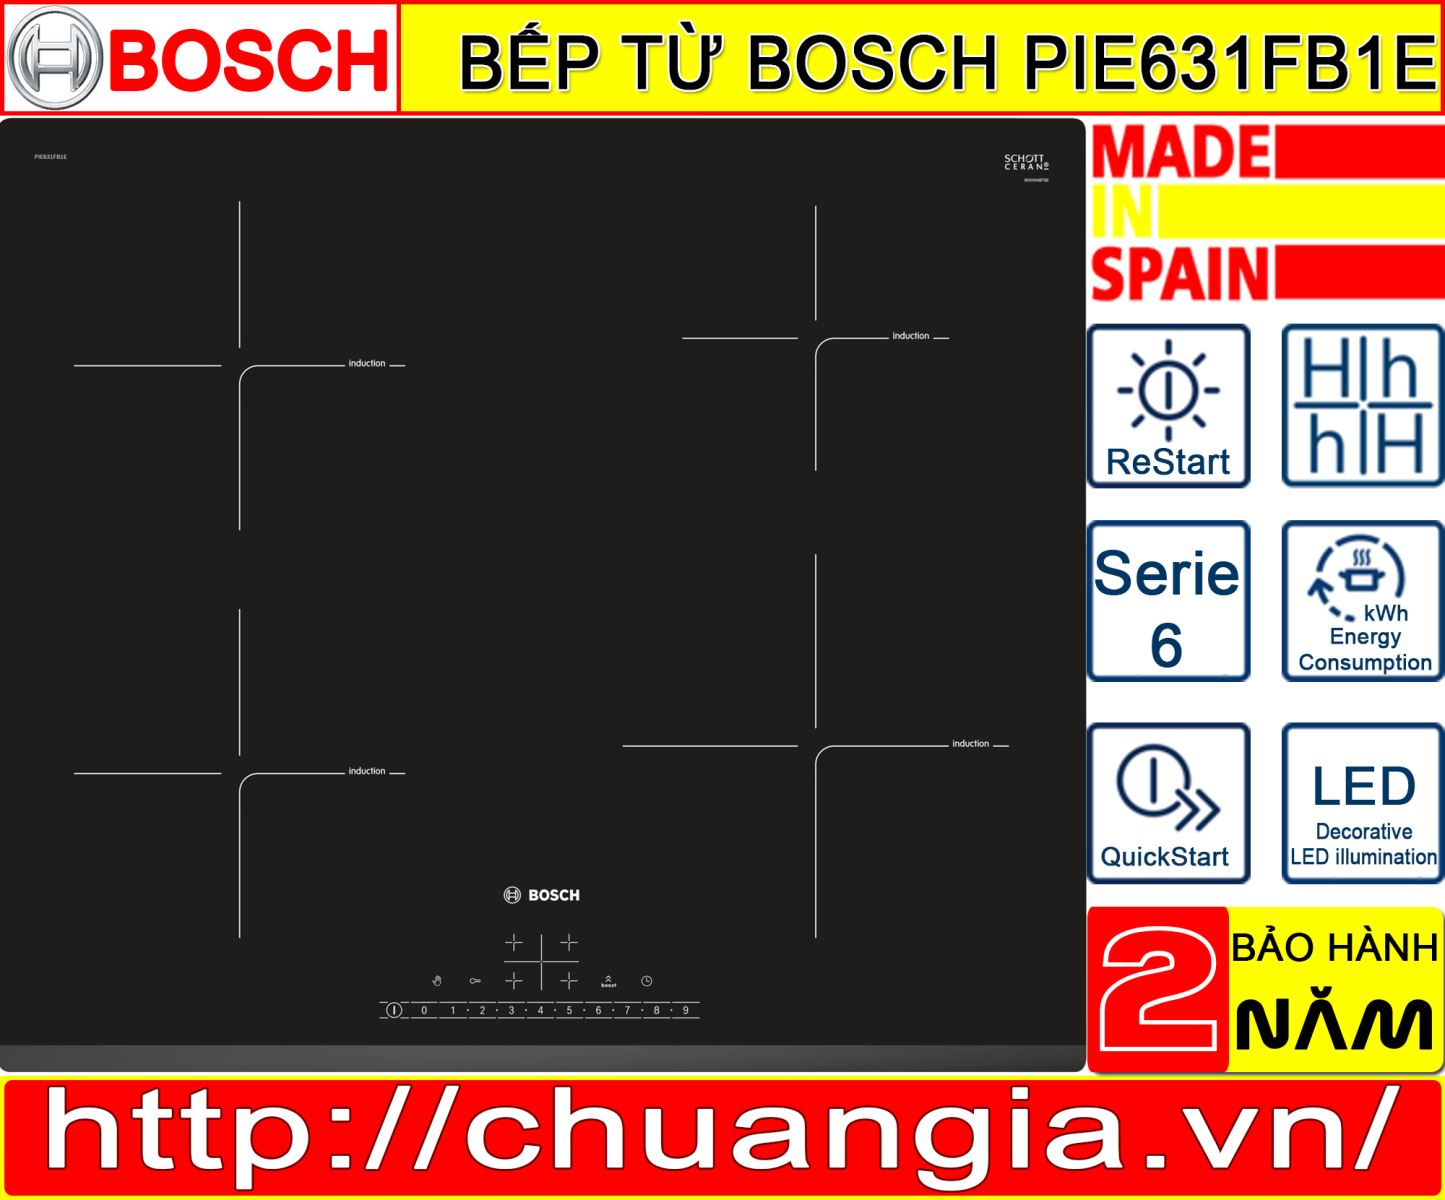 Bếp Từ Bosch PIE631FB1E, đánh giá bếp từ bosch pie631fb1e, bếp từ bosch pie631fb1e có tốt không, bếp từ 4 vùng nấu bosch pie631fb1e, bếp bosch puc631bb2e, bosch pie631fb1e amazon, bếp từ bosch pij651fc1e, báo giá bếp từ bosch, bosch pie631fb1e serie 6